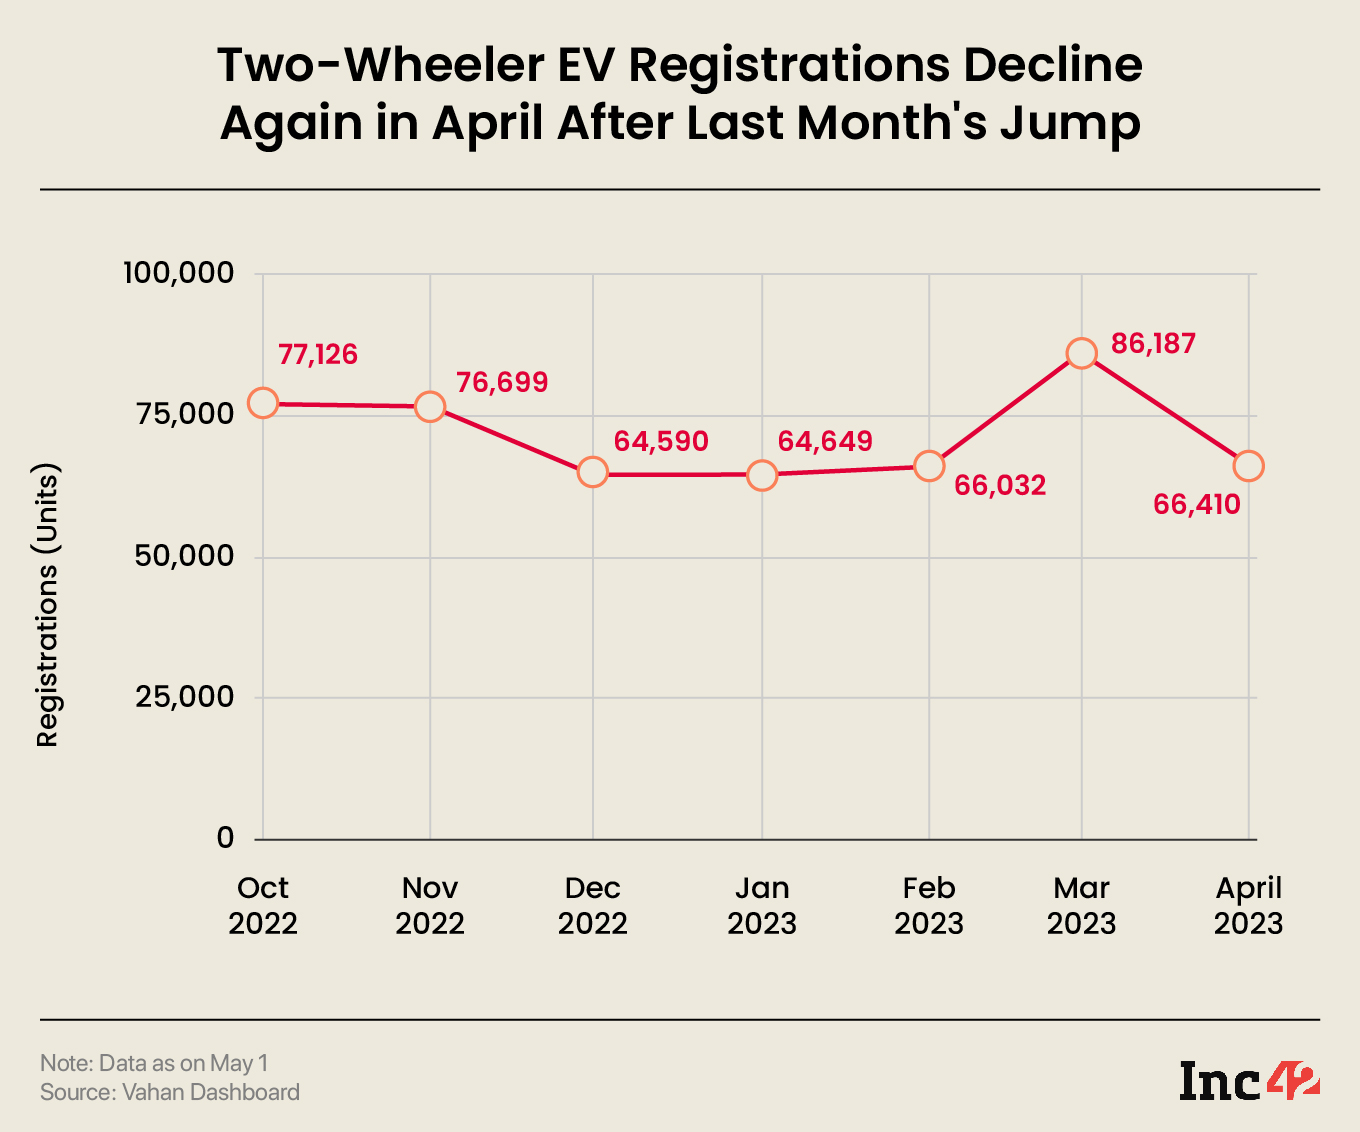 Two-Wheeler EV Registrations Decline Again in April After Last Month's Jump